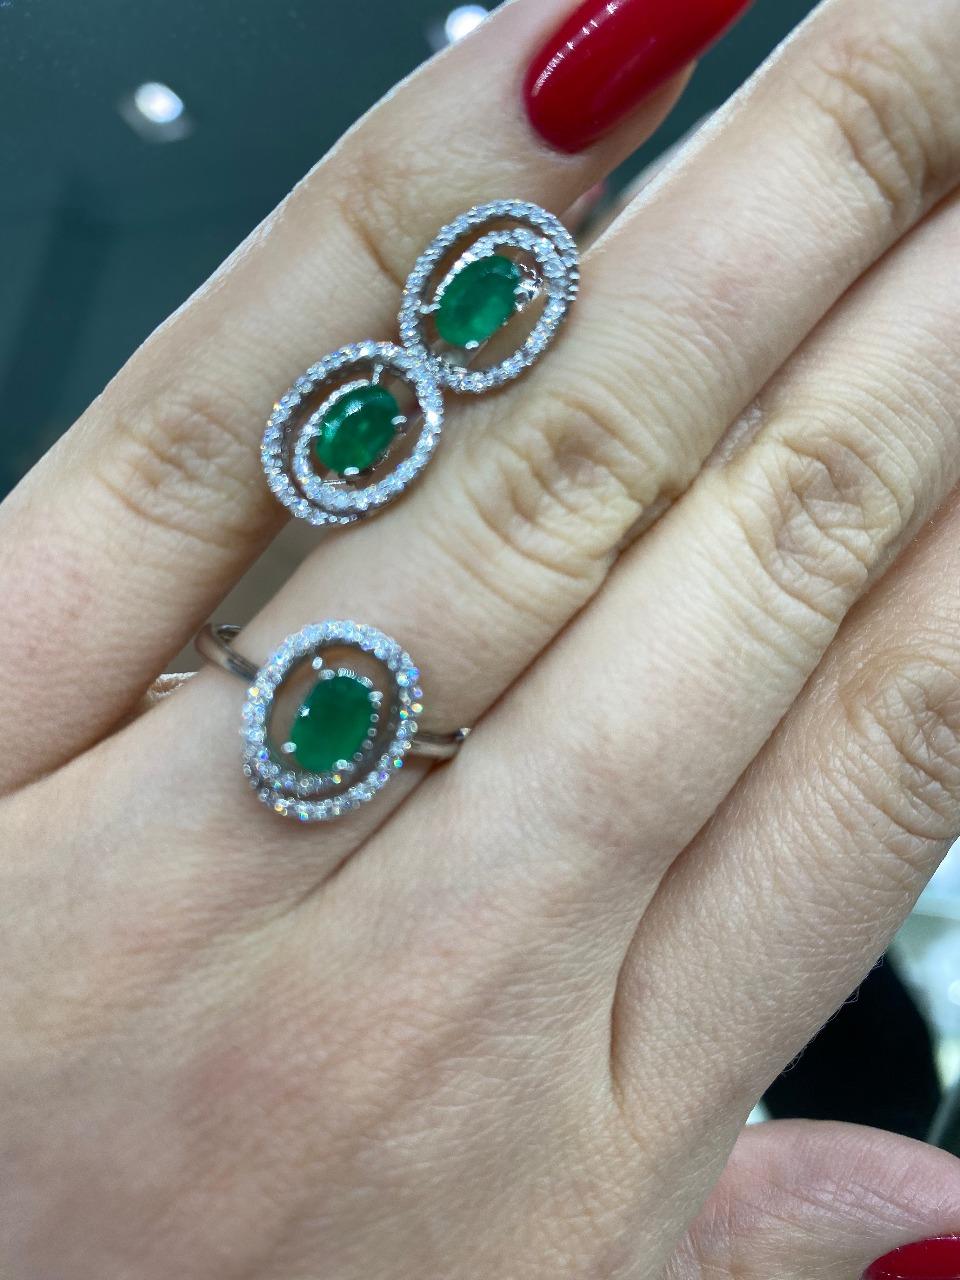 2 carat emerald earrings